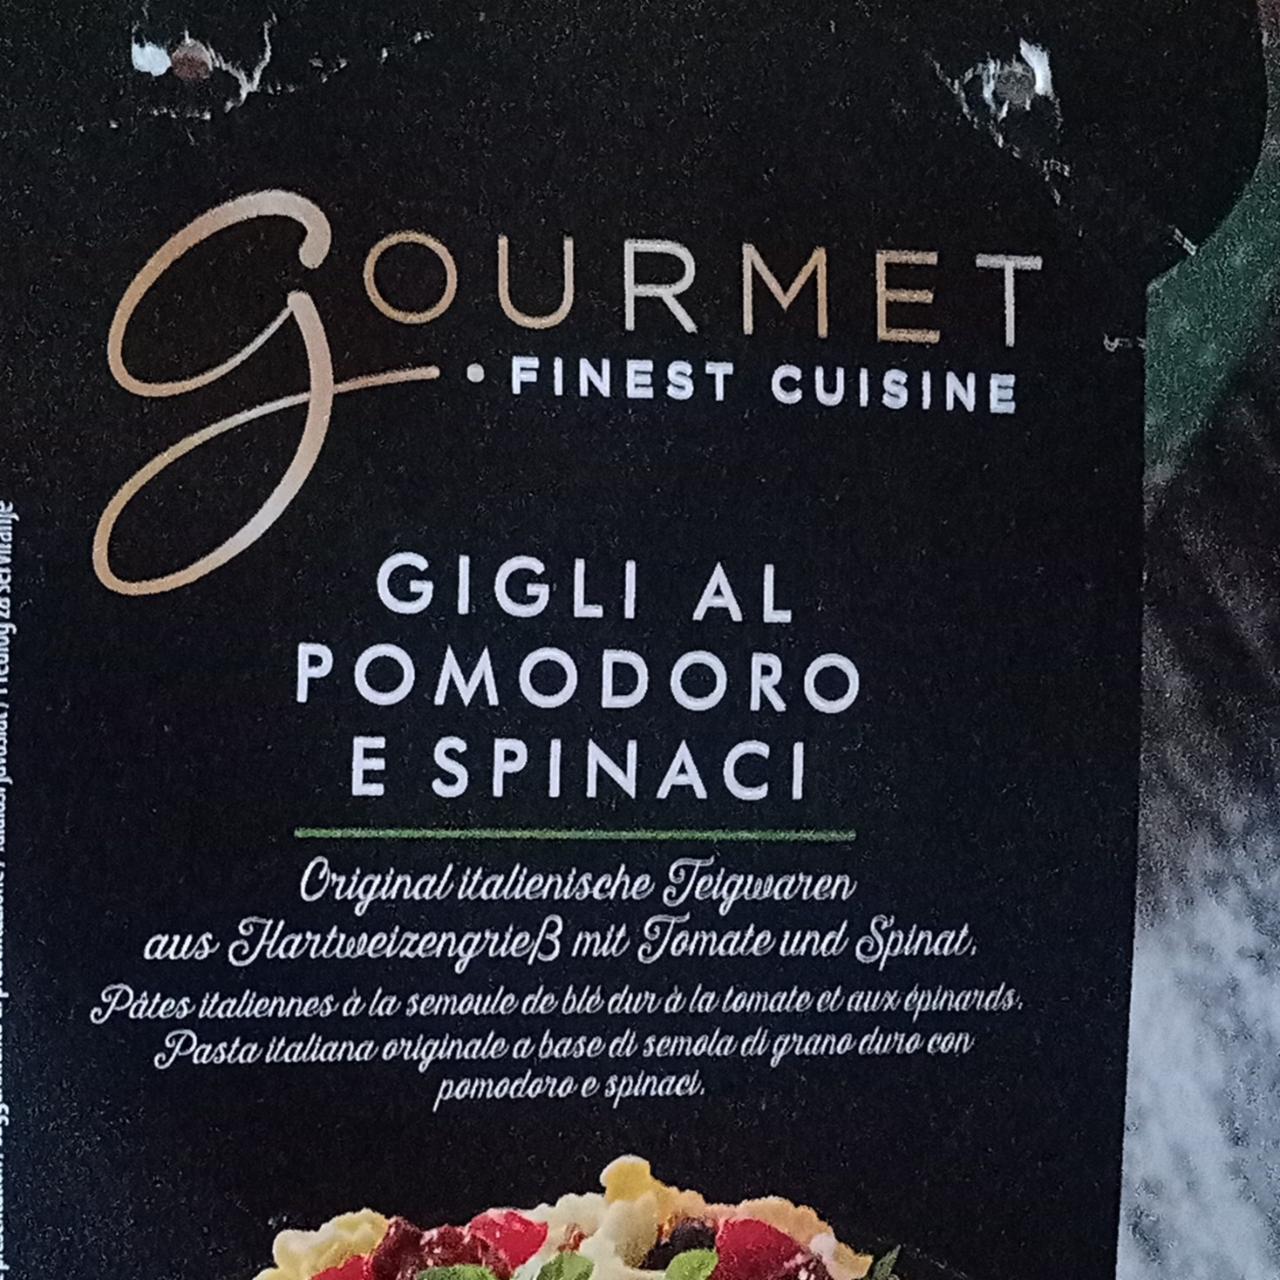 Fotografie - Gigli al pomodoro e spinaci Gourmet